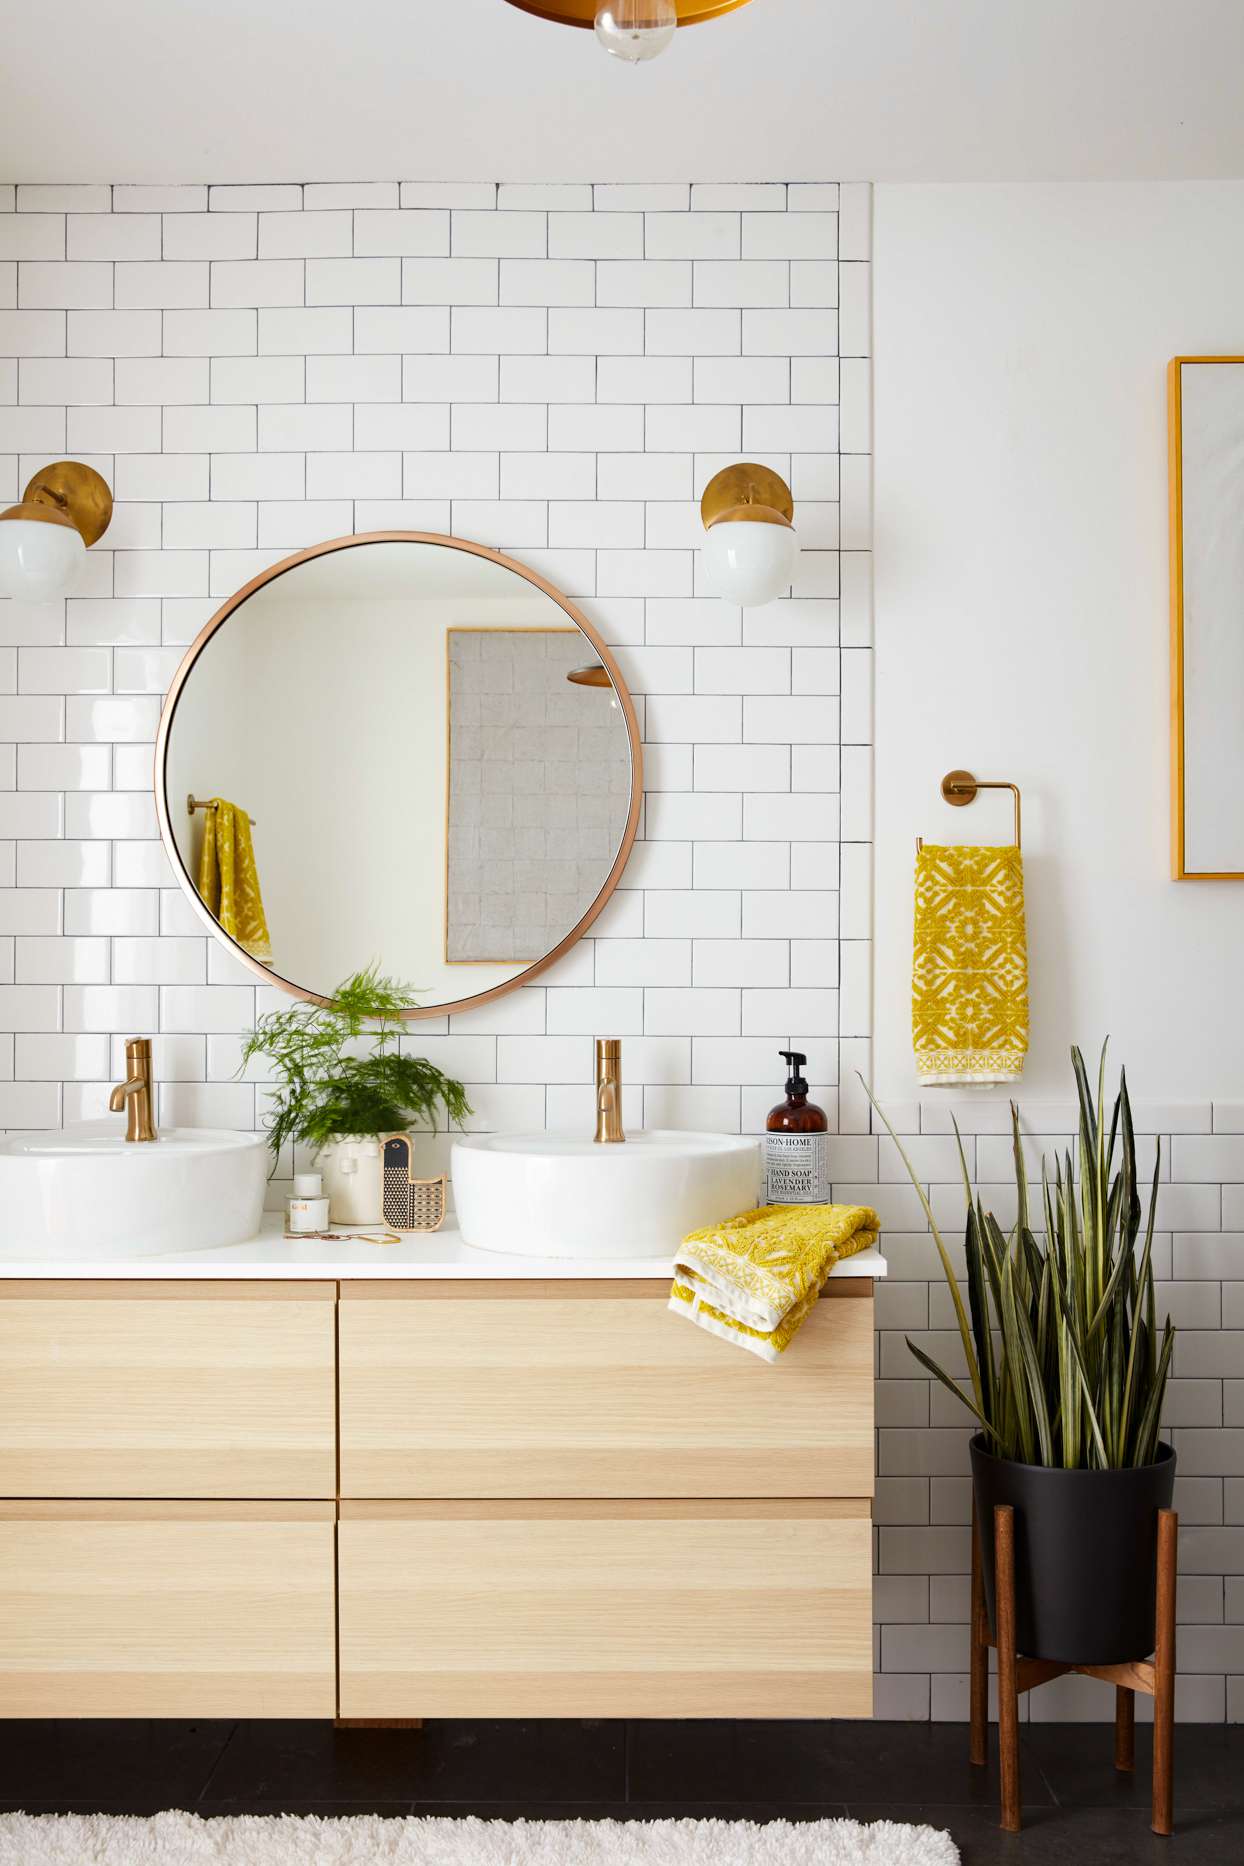 bathroom vanity with 4 drawers in light wood